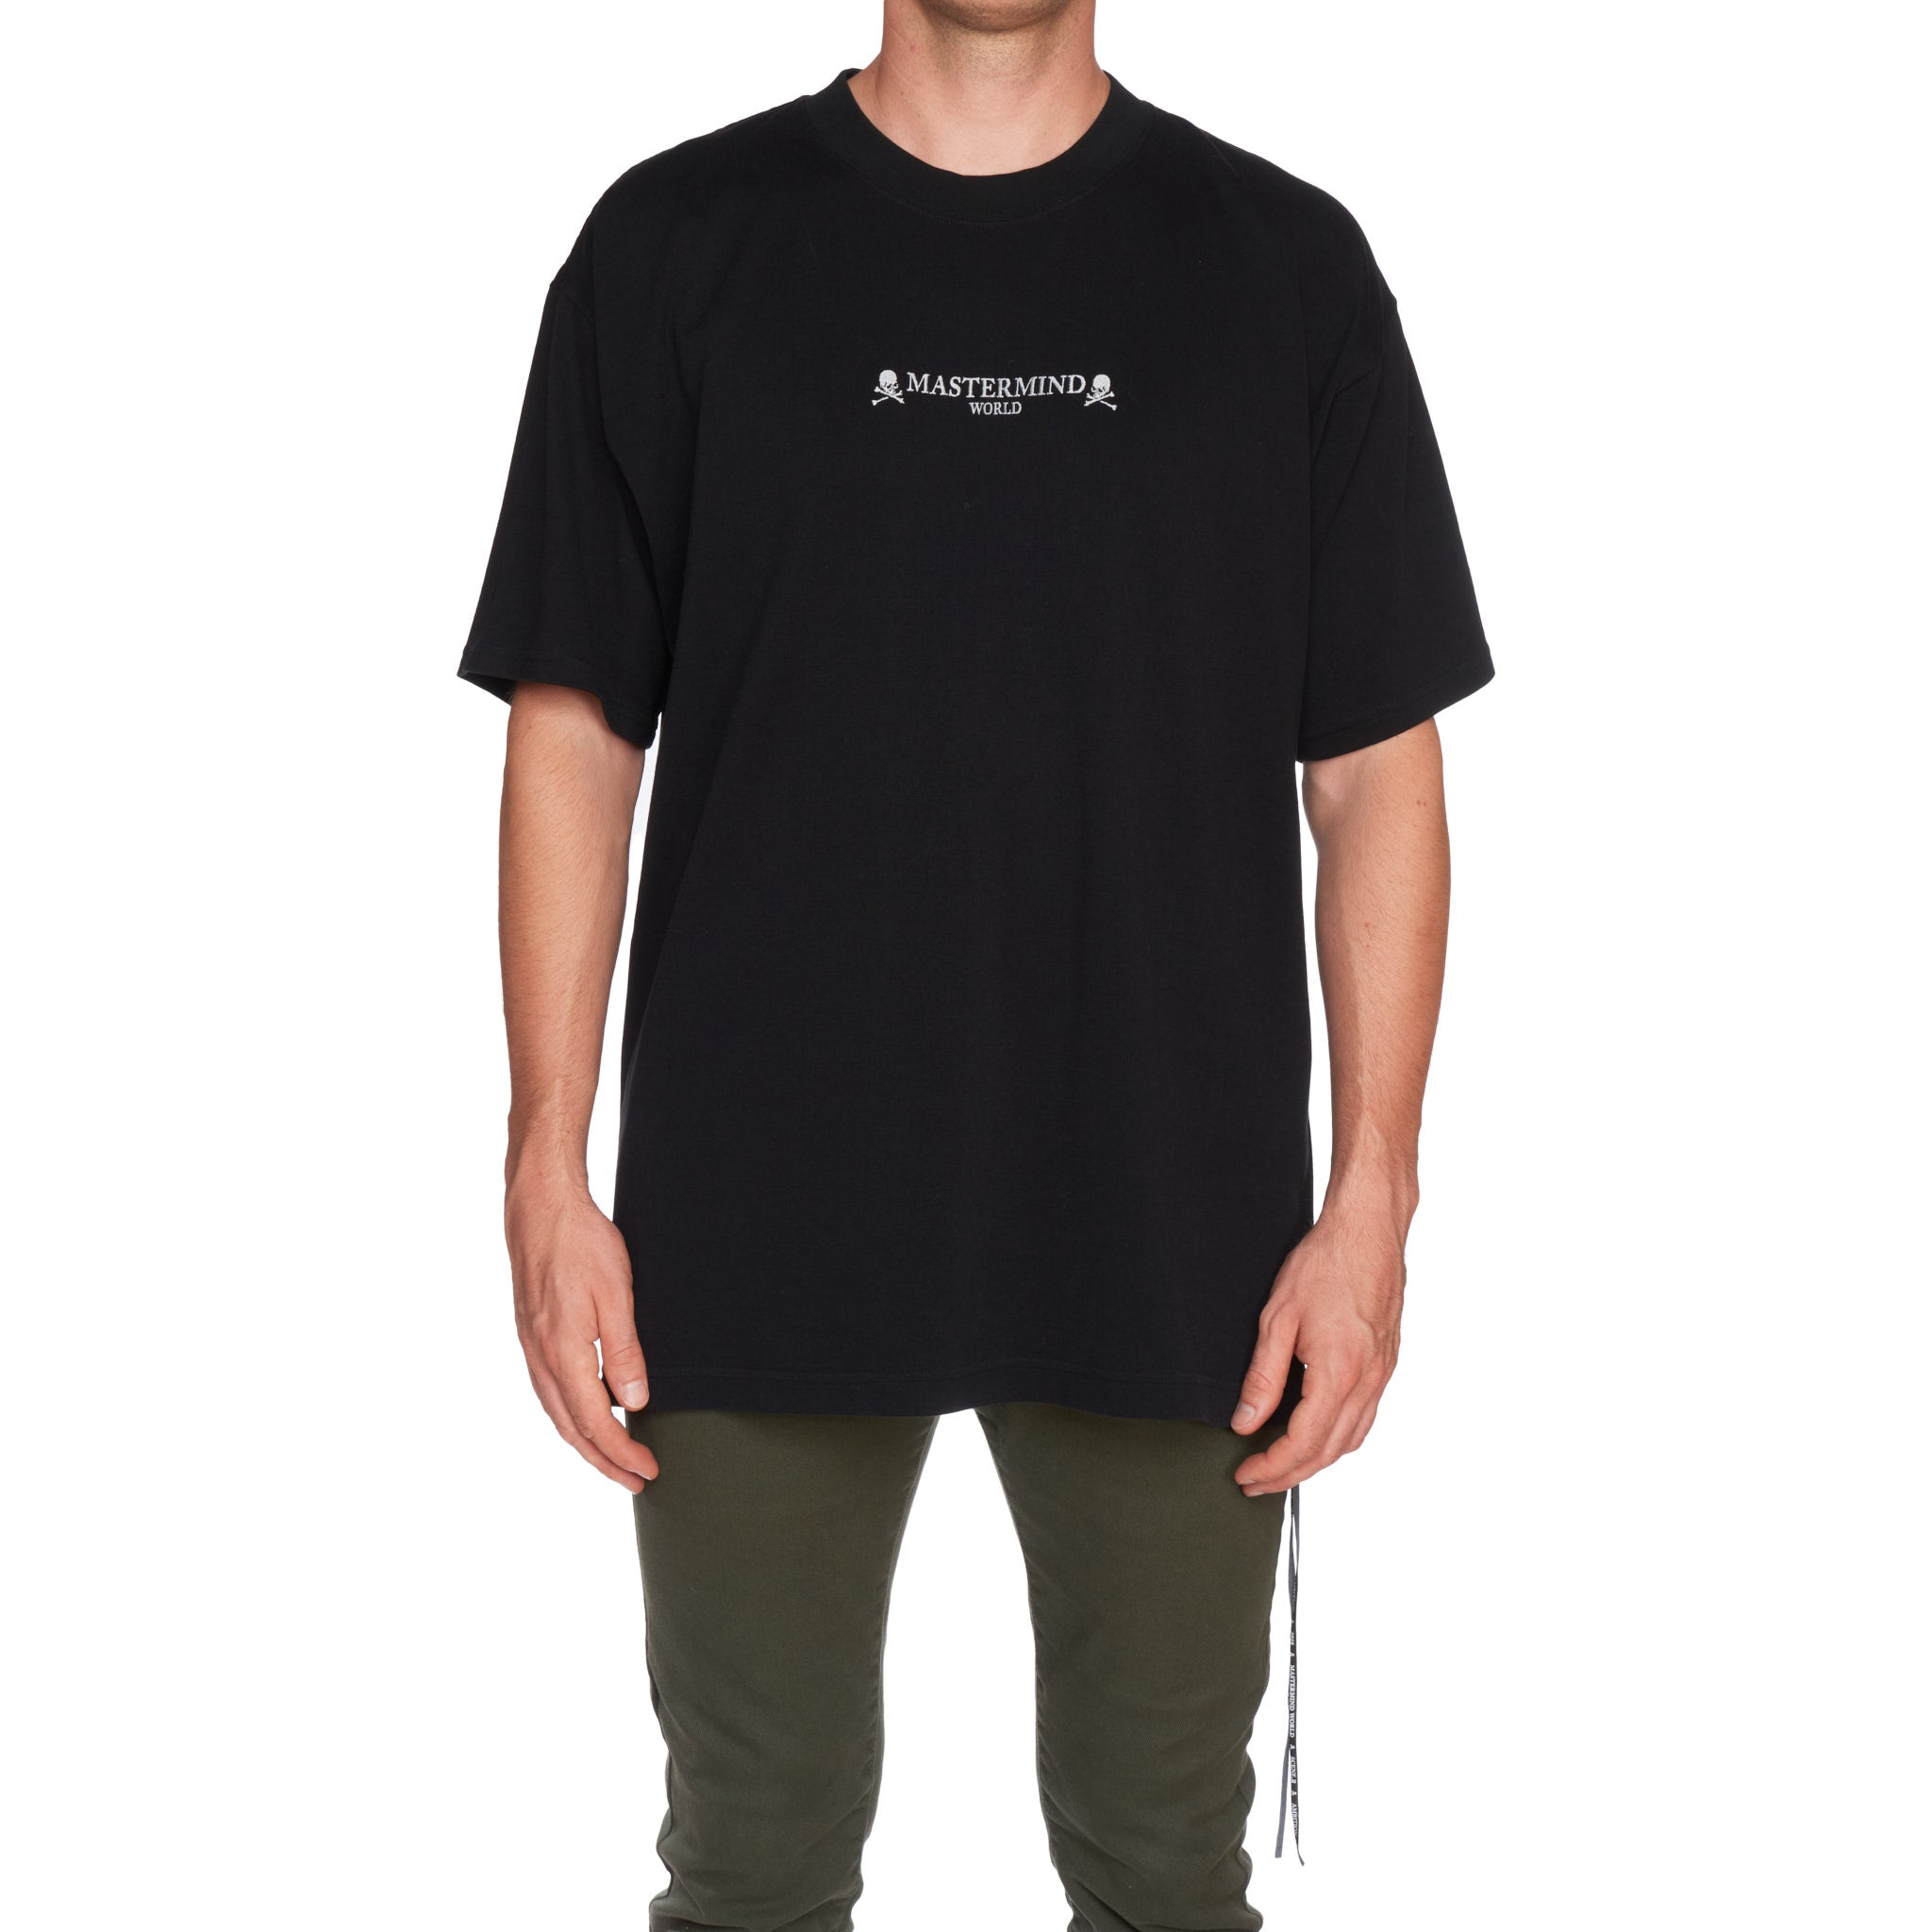 Lv Creation Solid Men Polo Neck Black T-shirt